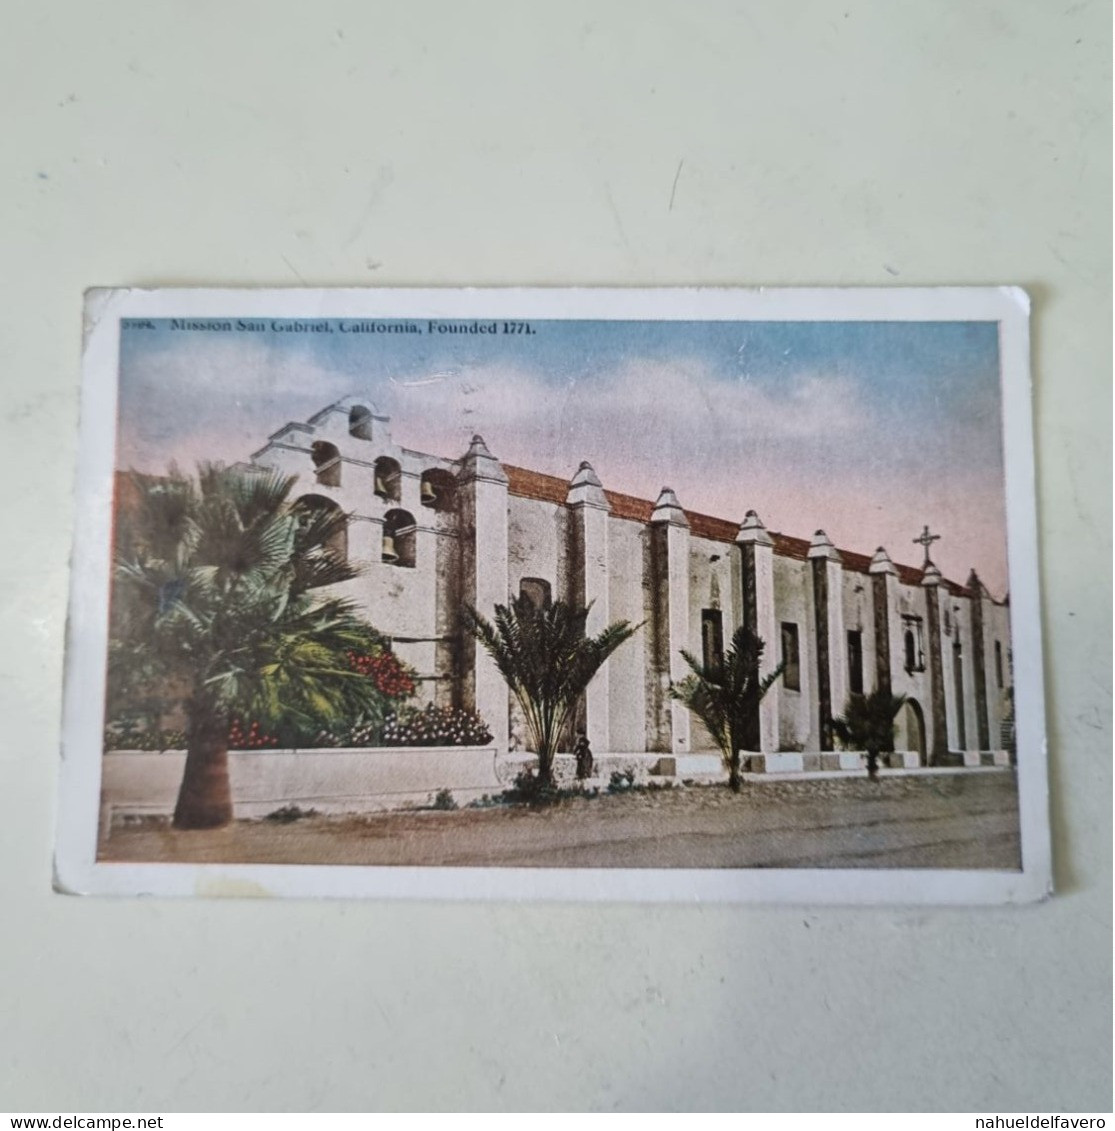 Circulated Postcard 1931 - U.S.A. - MISSION SAN GABRIEL, CALIFORNIA, FOUNDED 1771 - Los Angeles